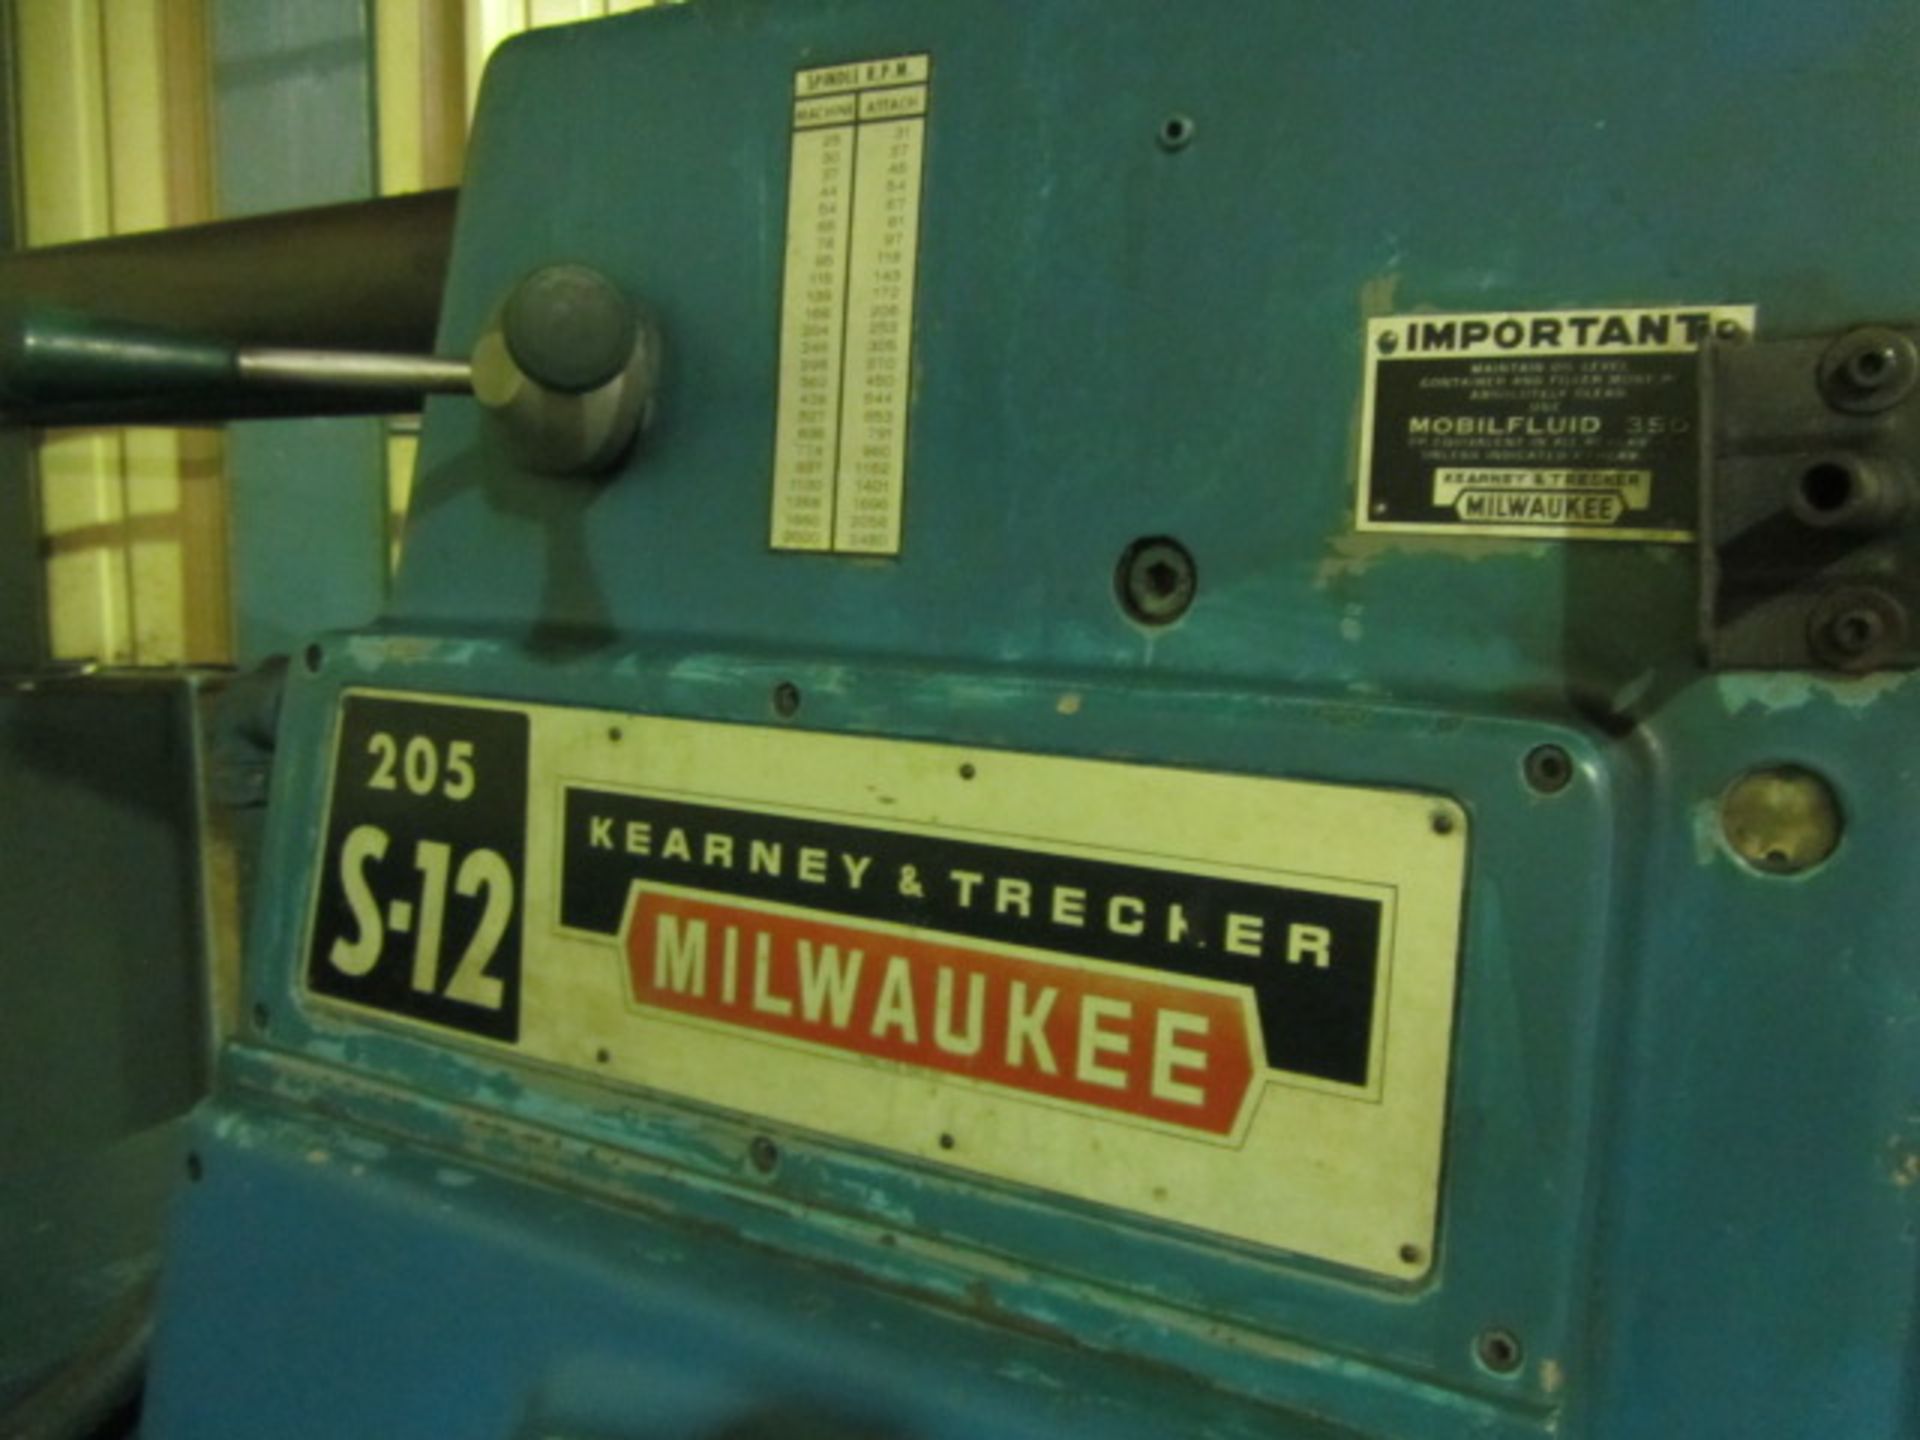 Kearney & Trecker Model S12, 205 Milwaukee Horizontal Milling Machine with 12'' x 56'' Power Feed - Image 5 of 6